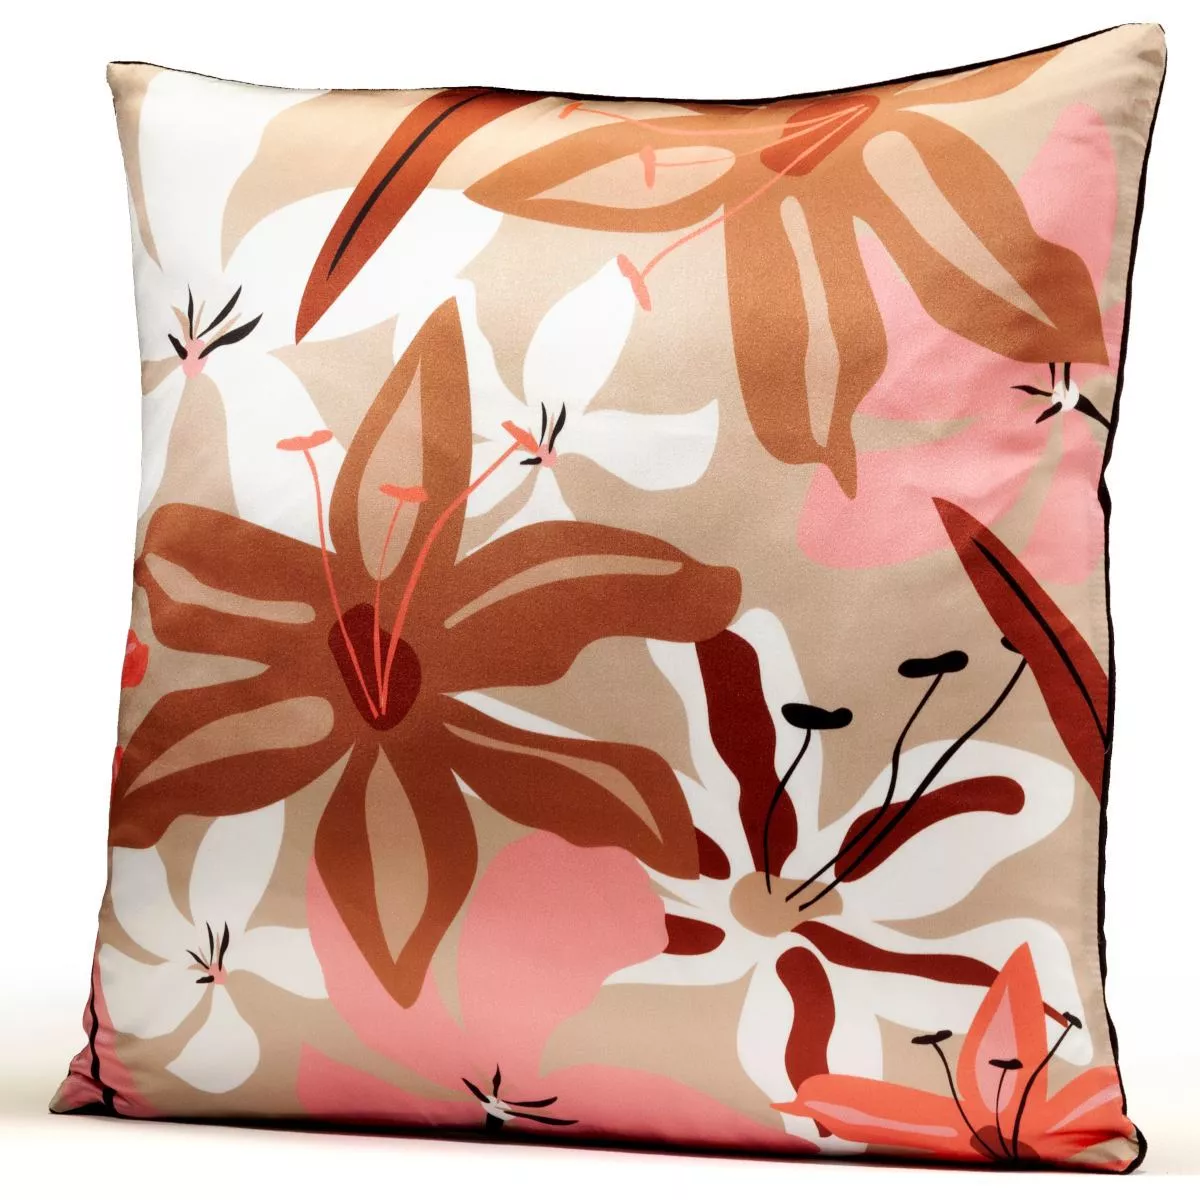 Hand-Sewn Sofa Cushion with Floral Pattern as Print on Silk (42 x 42 cm)